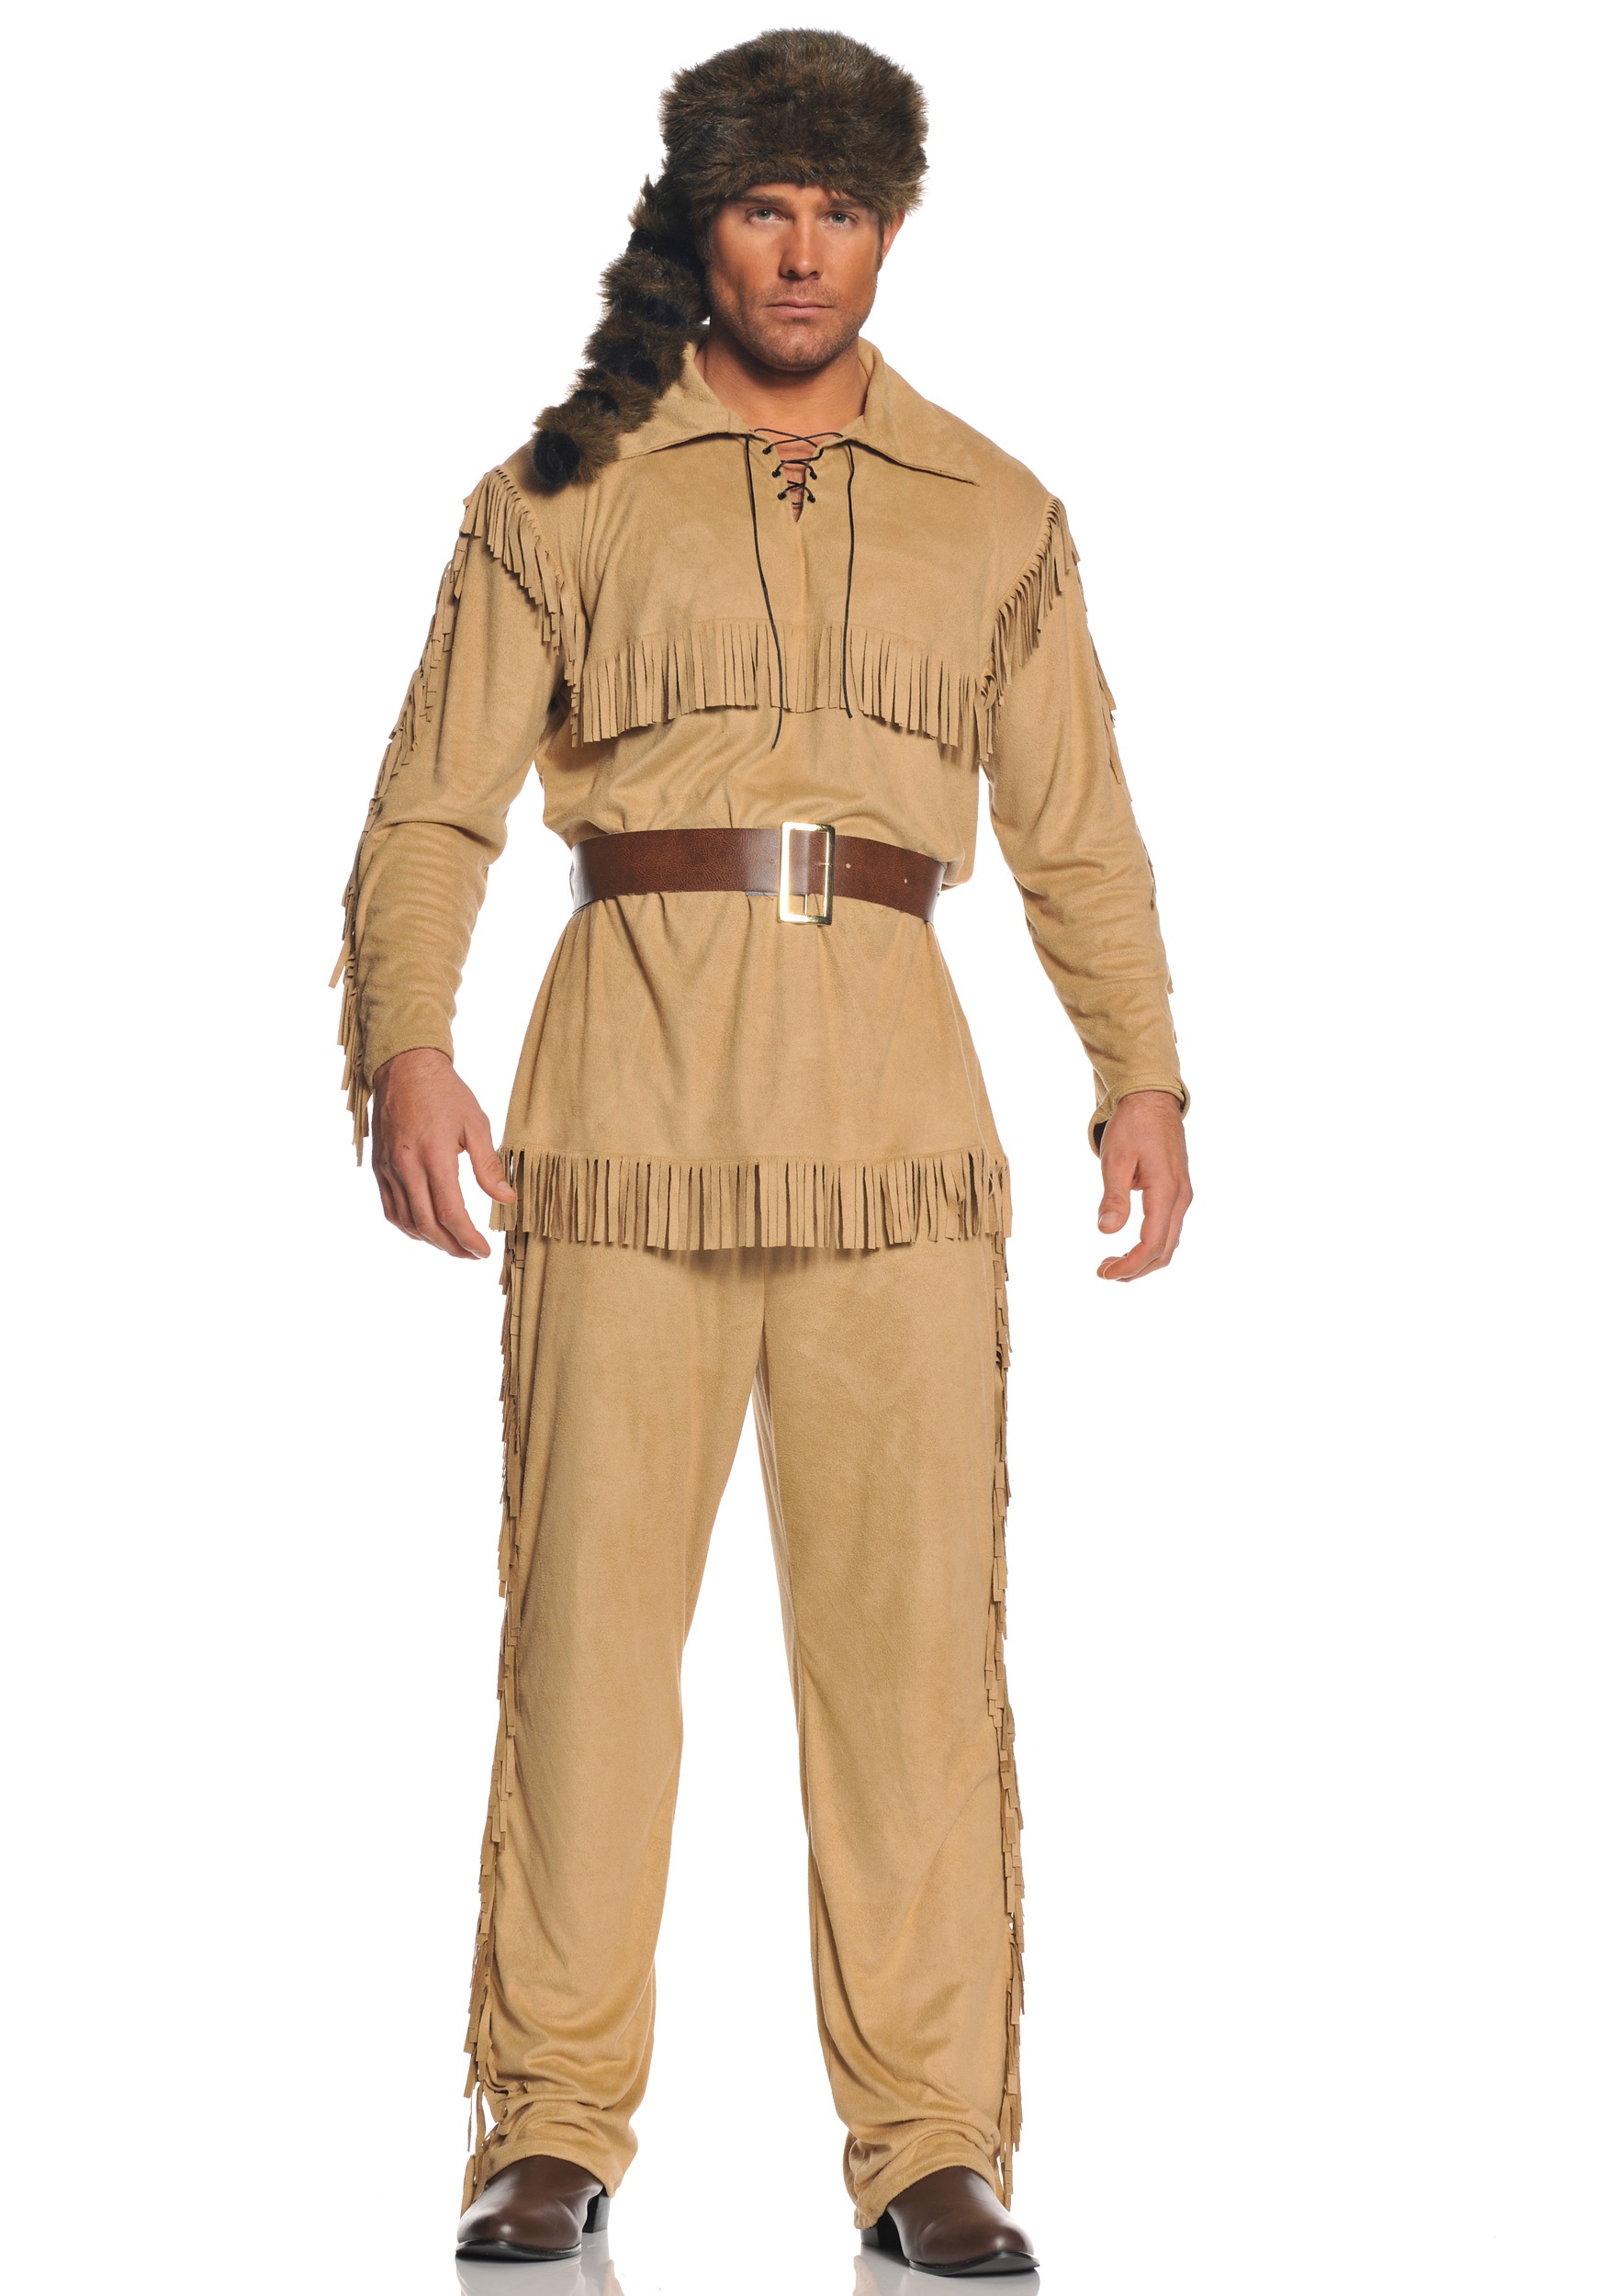 Adult Wilderness Man Costume